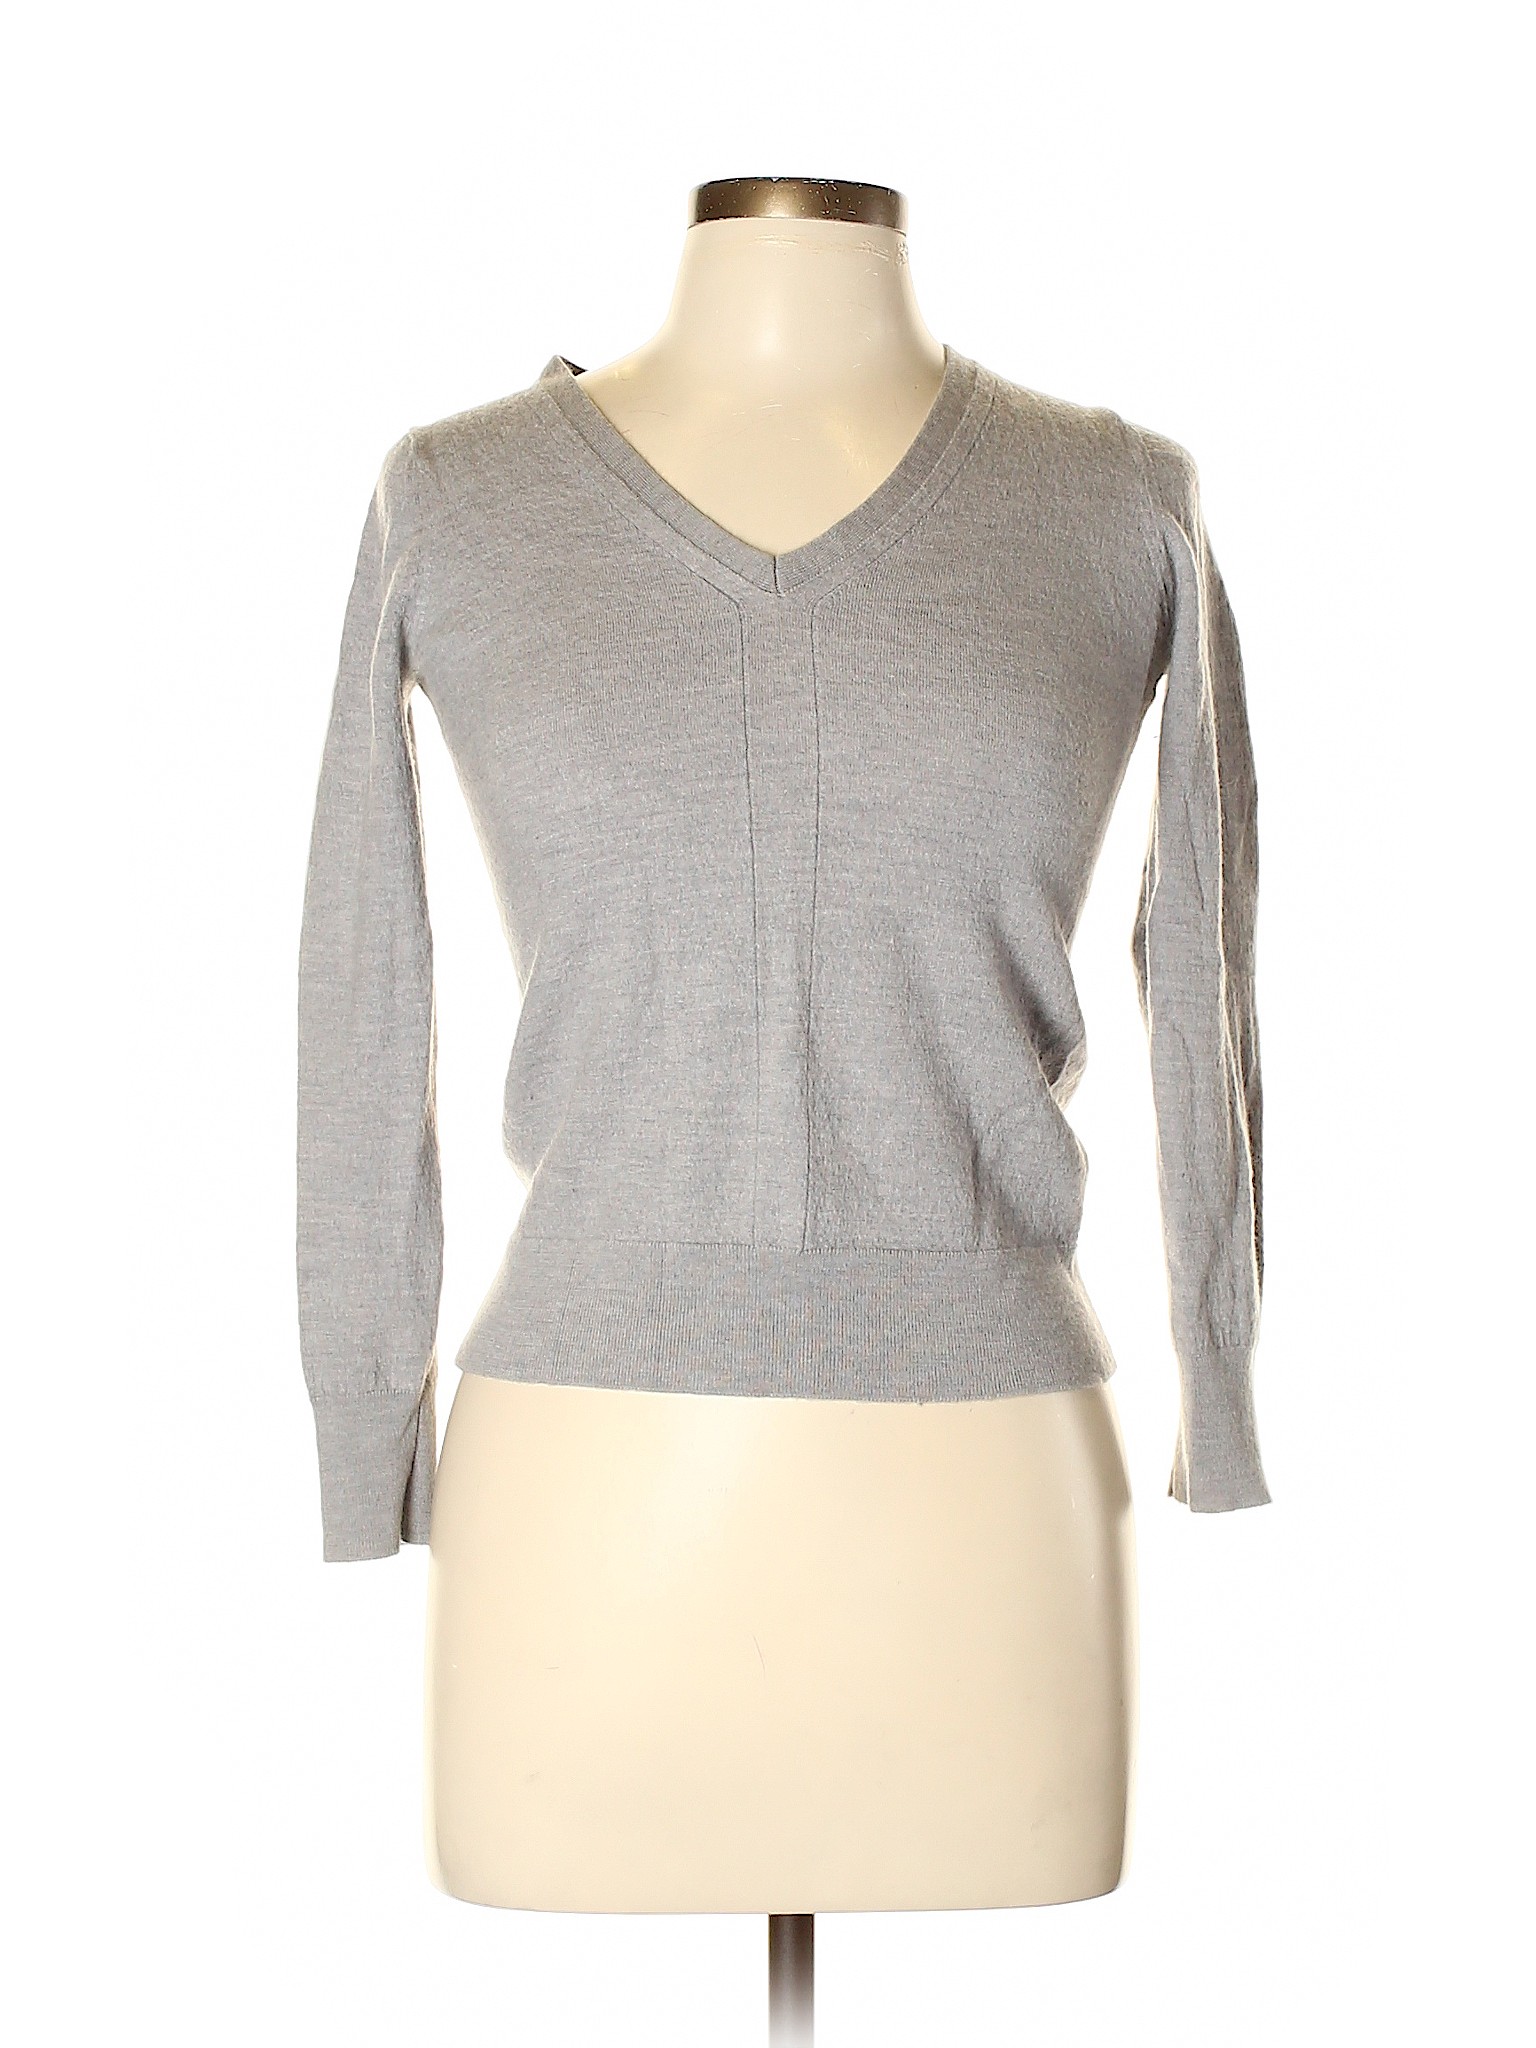 Banana Republic Women Gray Wool Pullover Sweater M | eBay